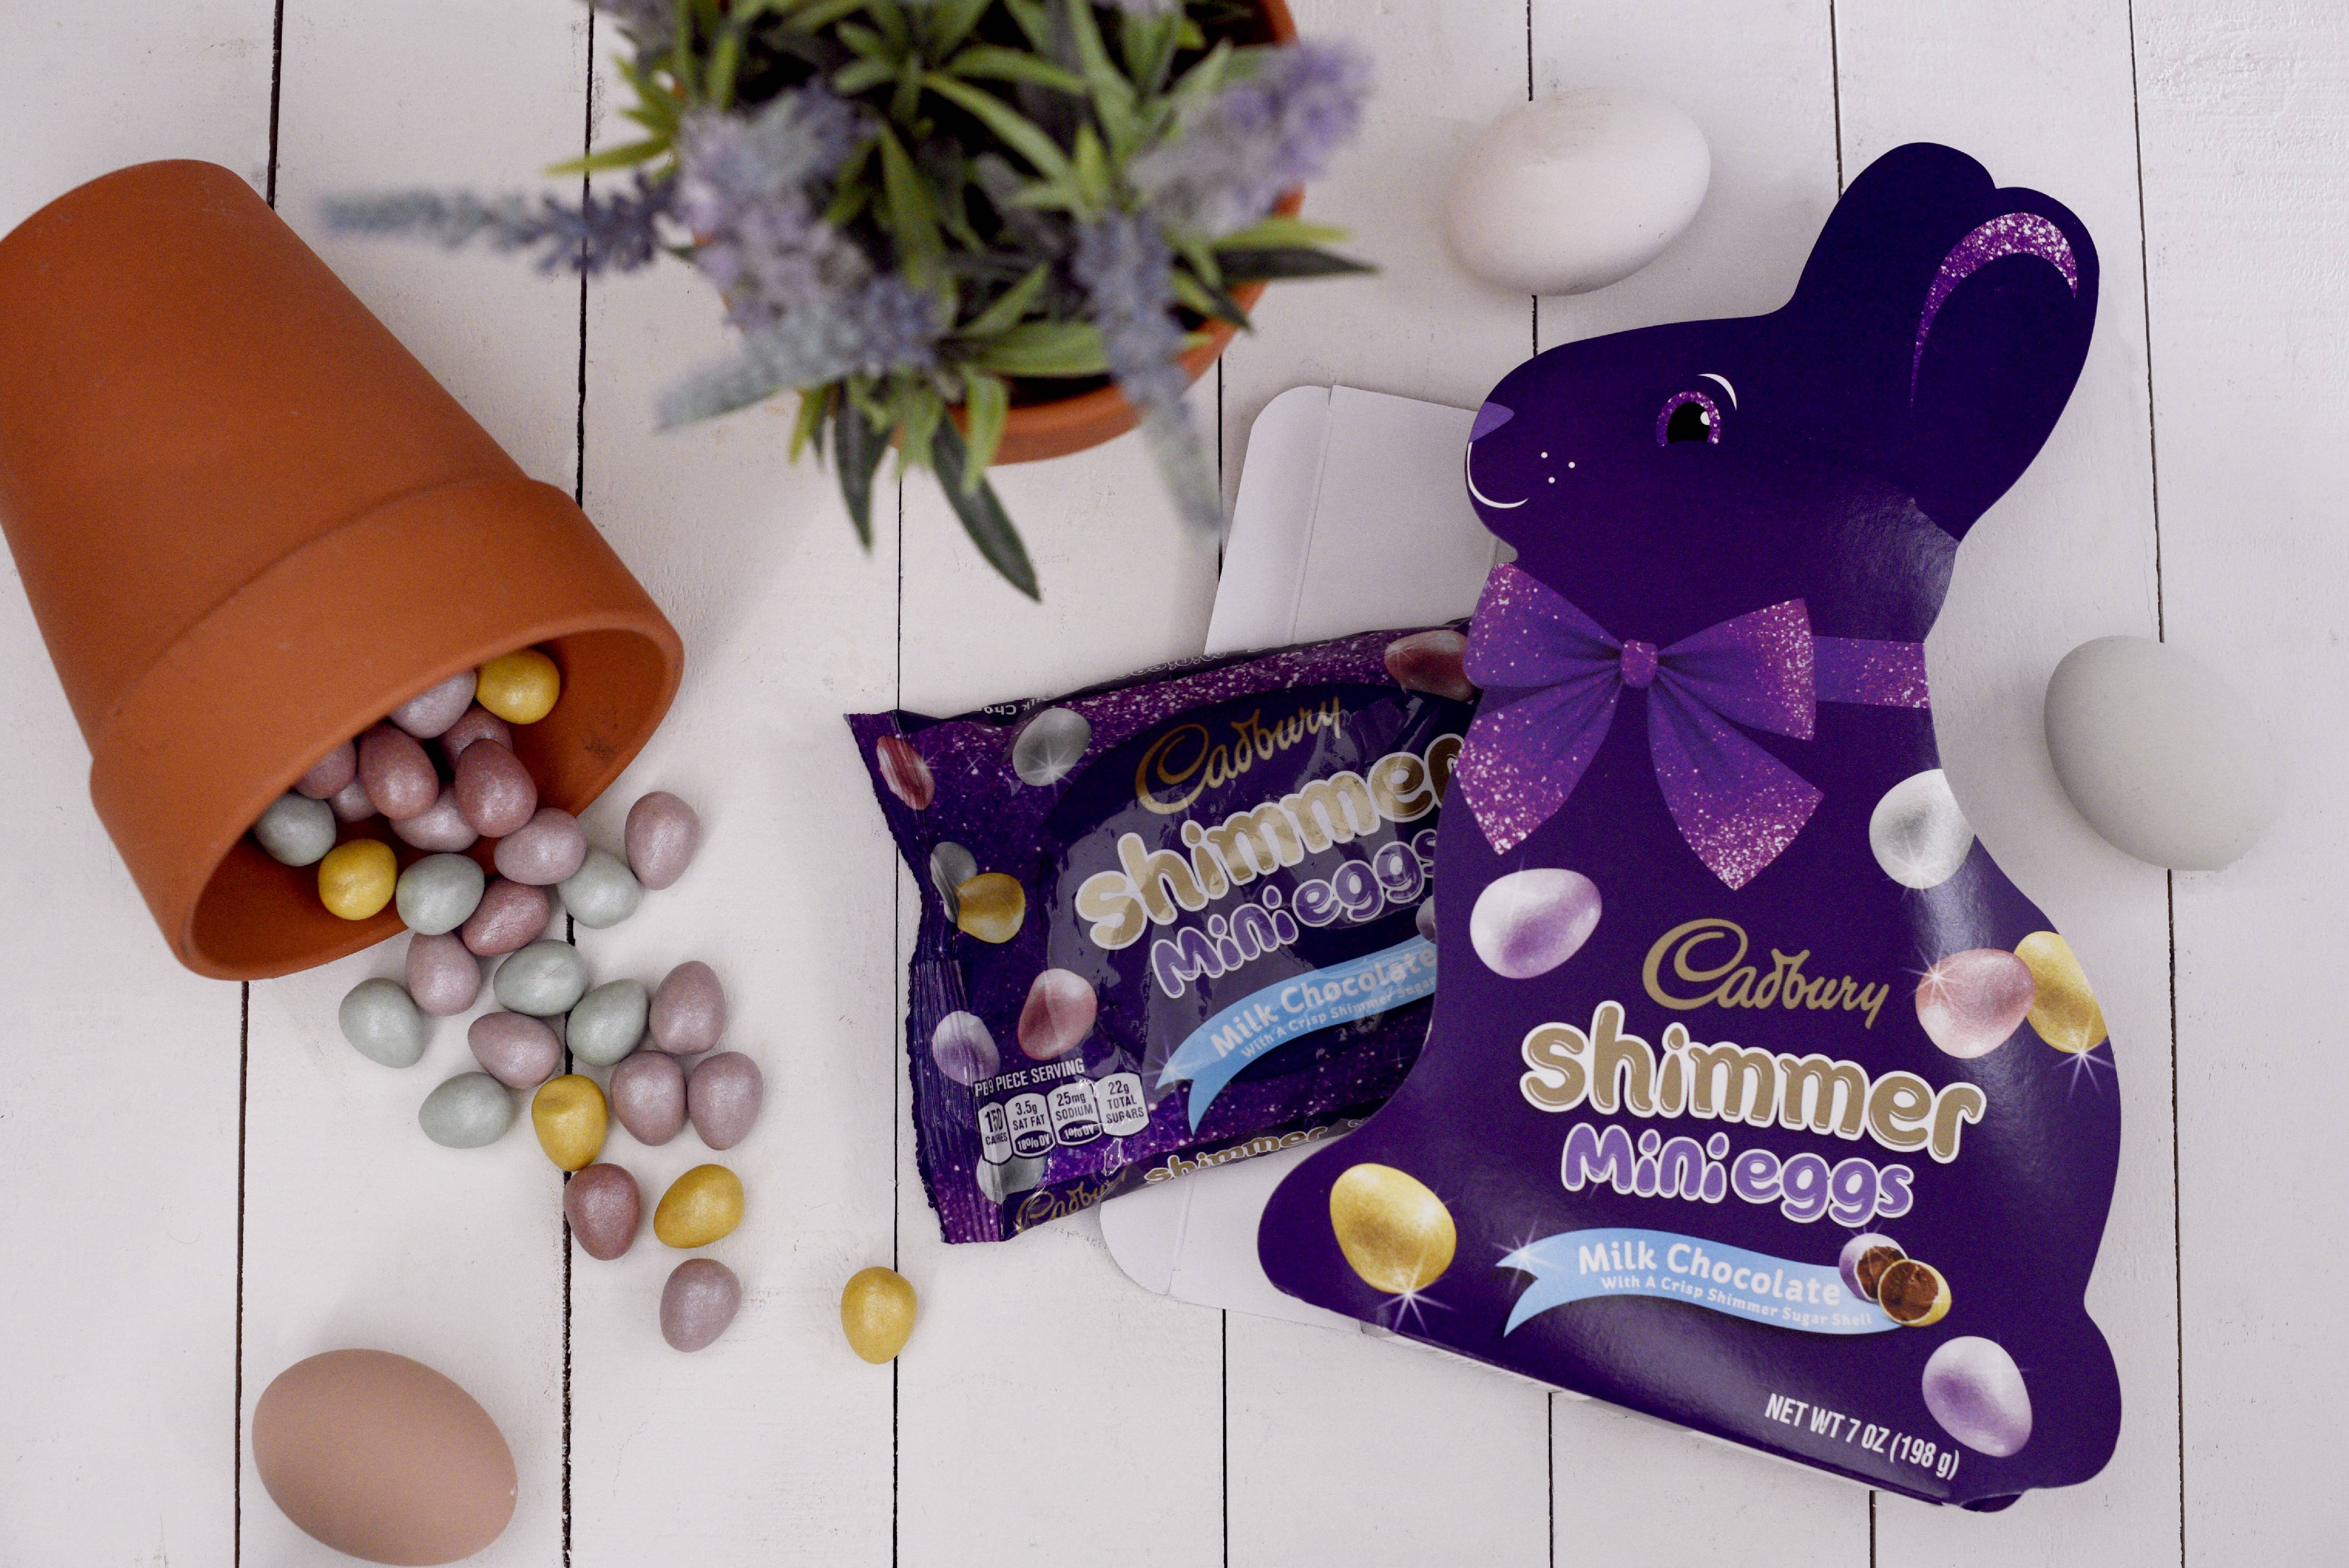 Cadbury, Easter Shimmer Mini Eggs Milk Chocolate Bunny Box Candy, 7 Oz - image 2 of 8